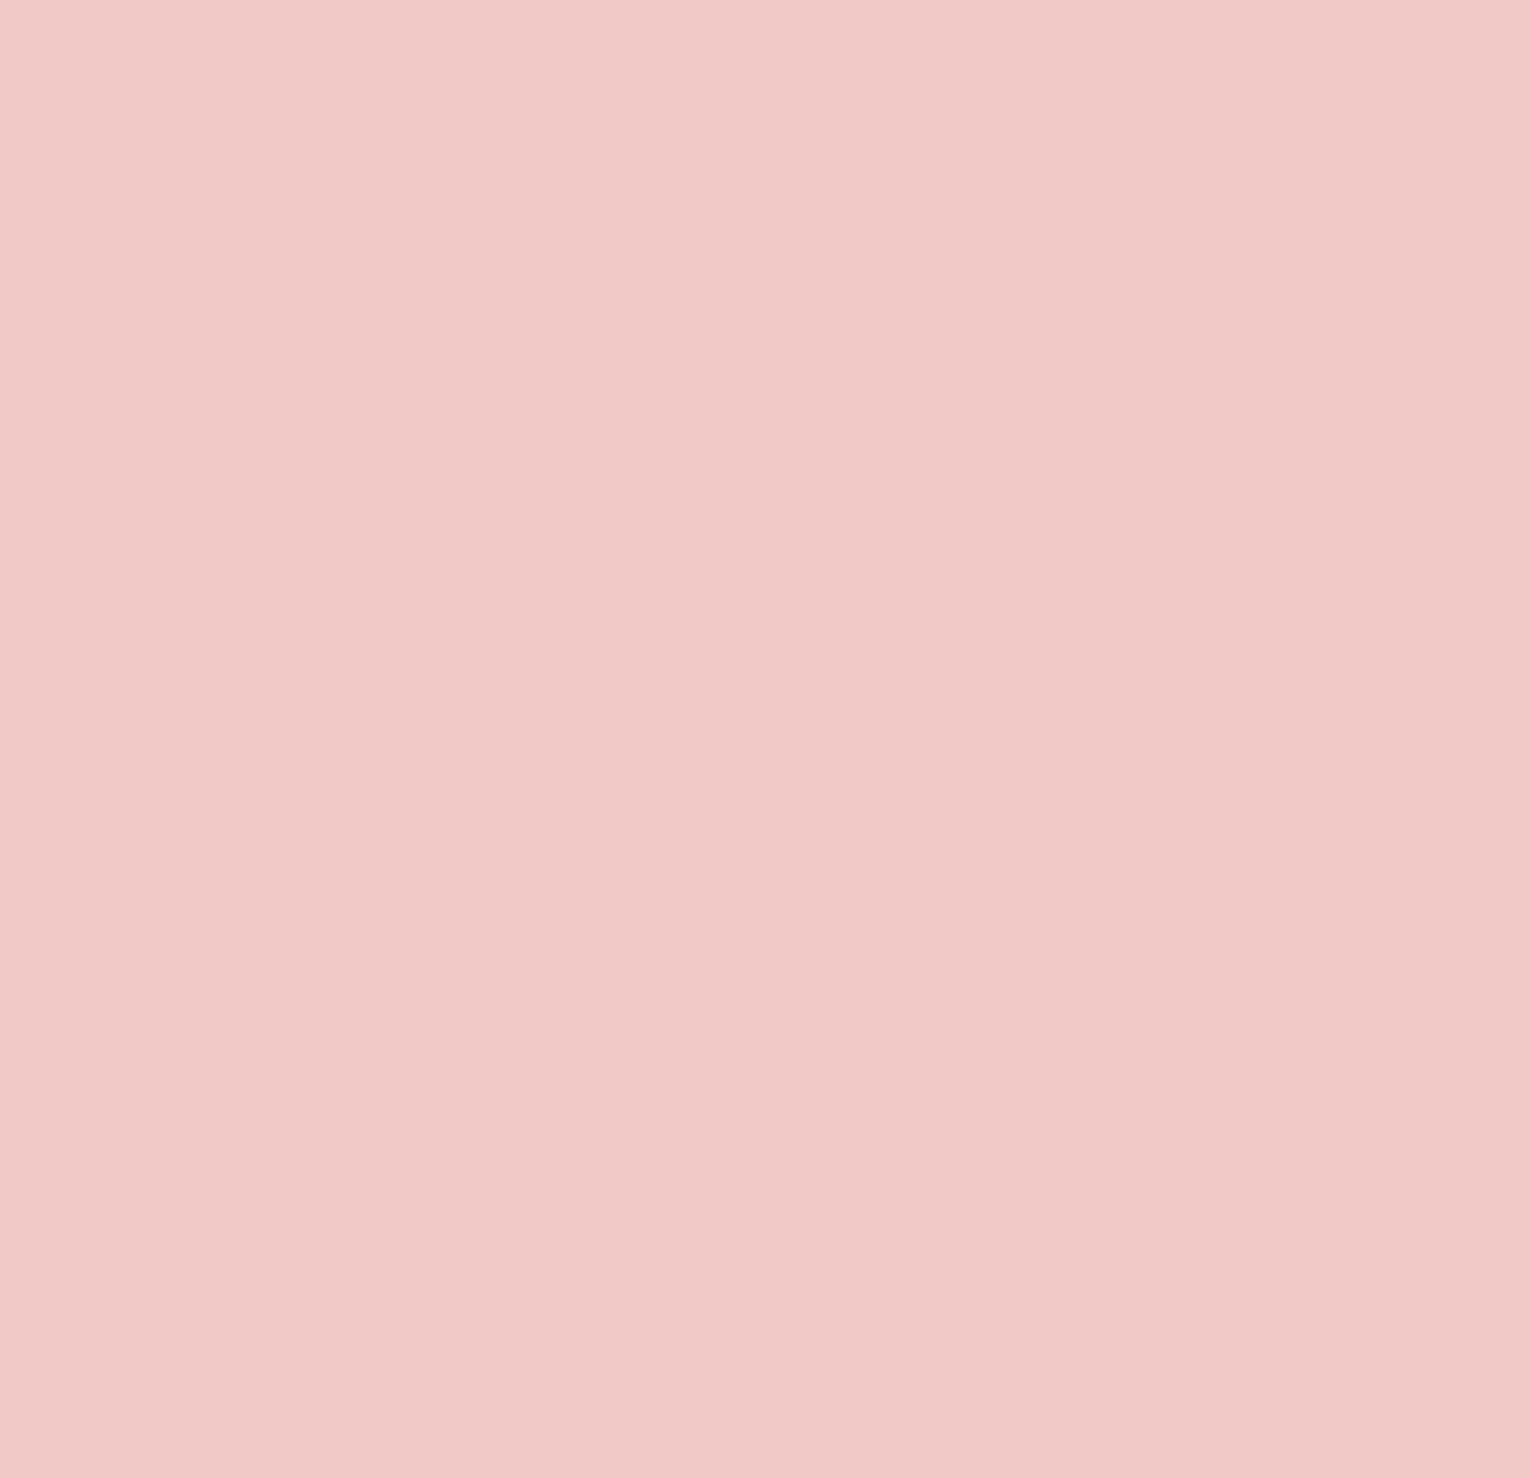 Blush pink background